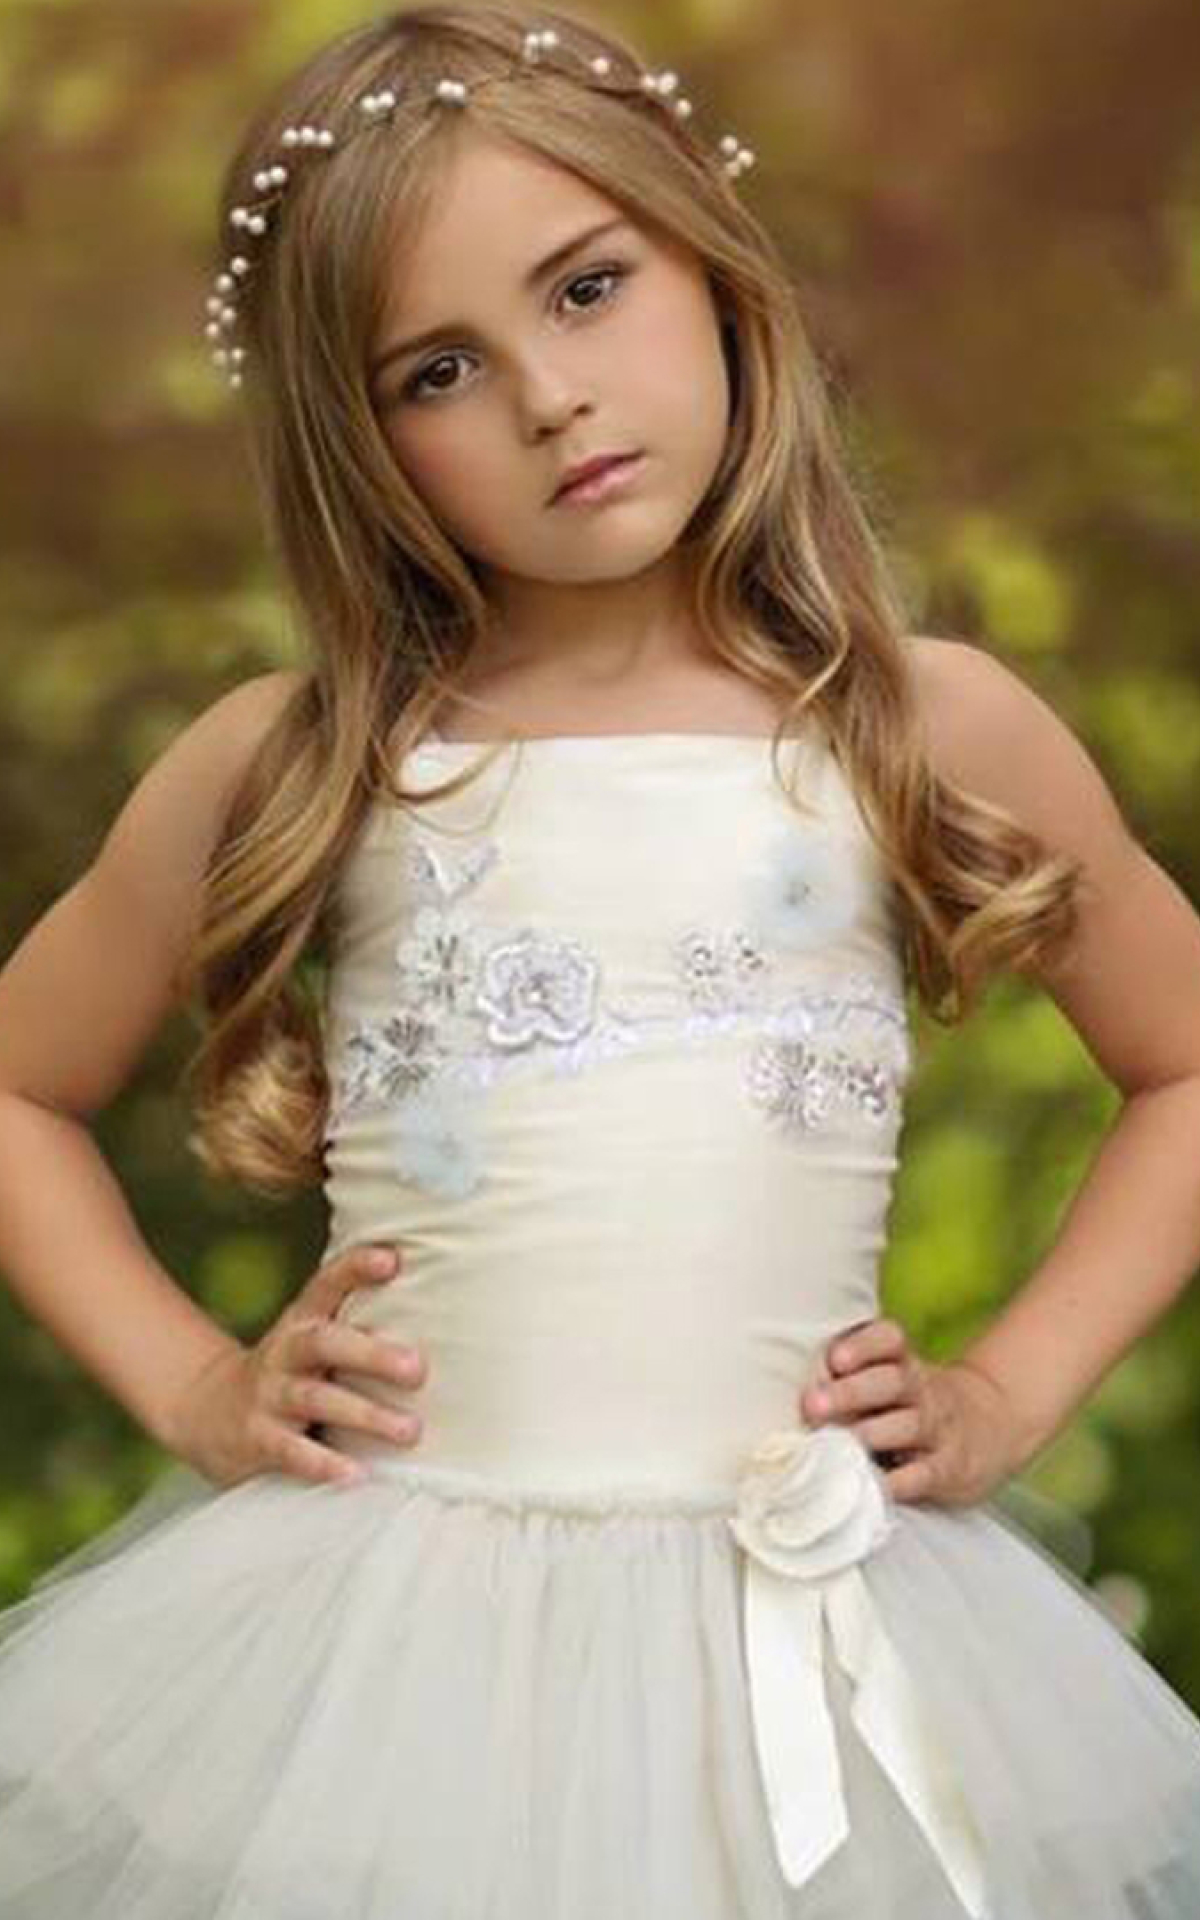 1200x1920 Cute Little Girl Photoshoot in White Dress 1200x1920 ...